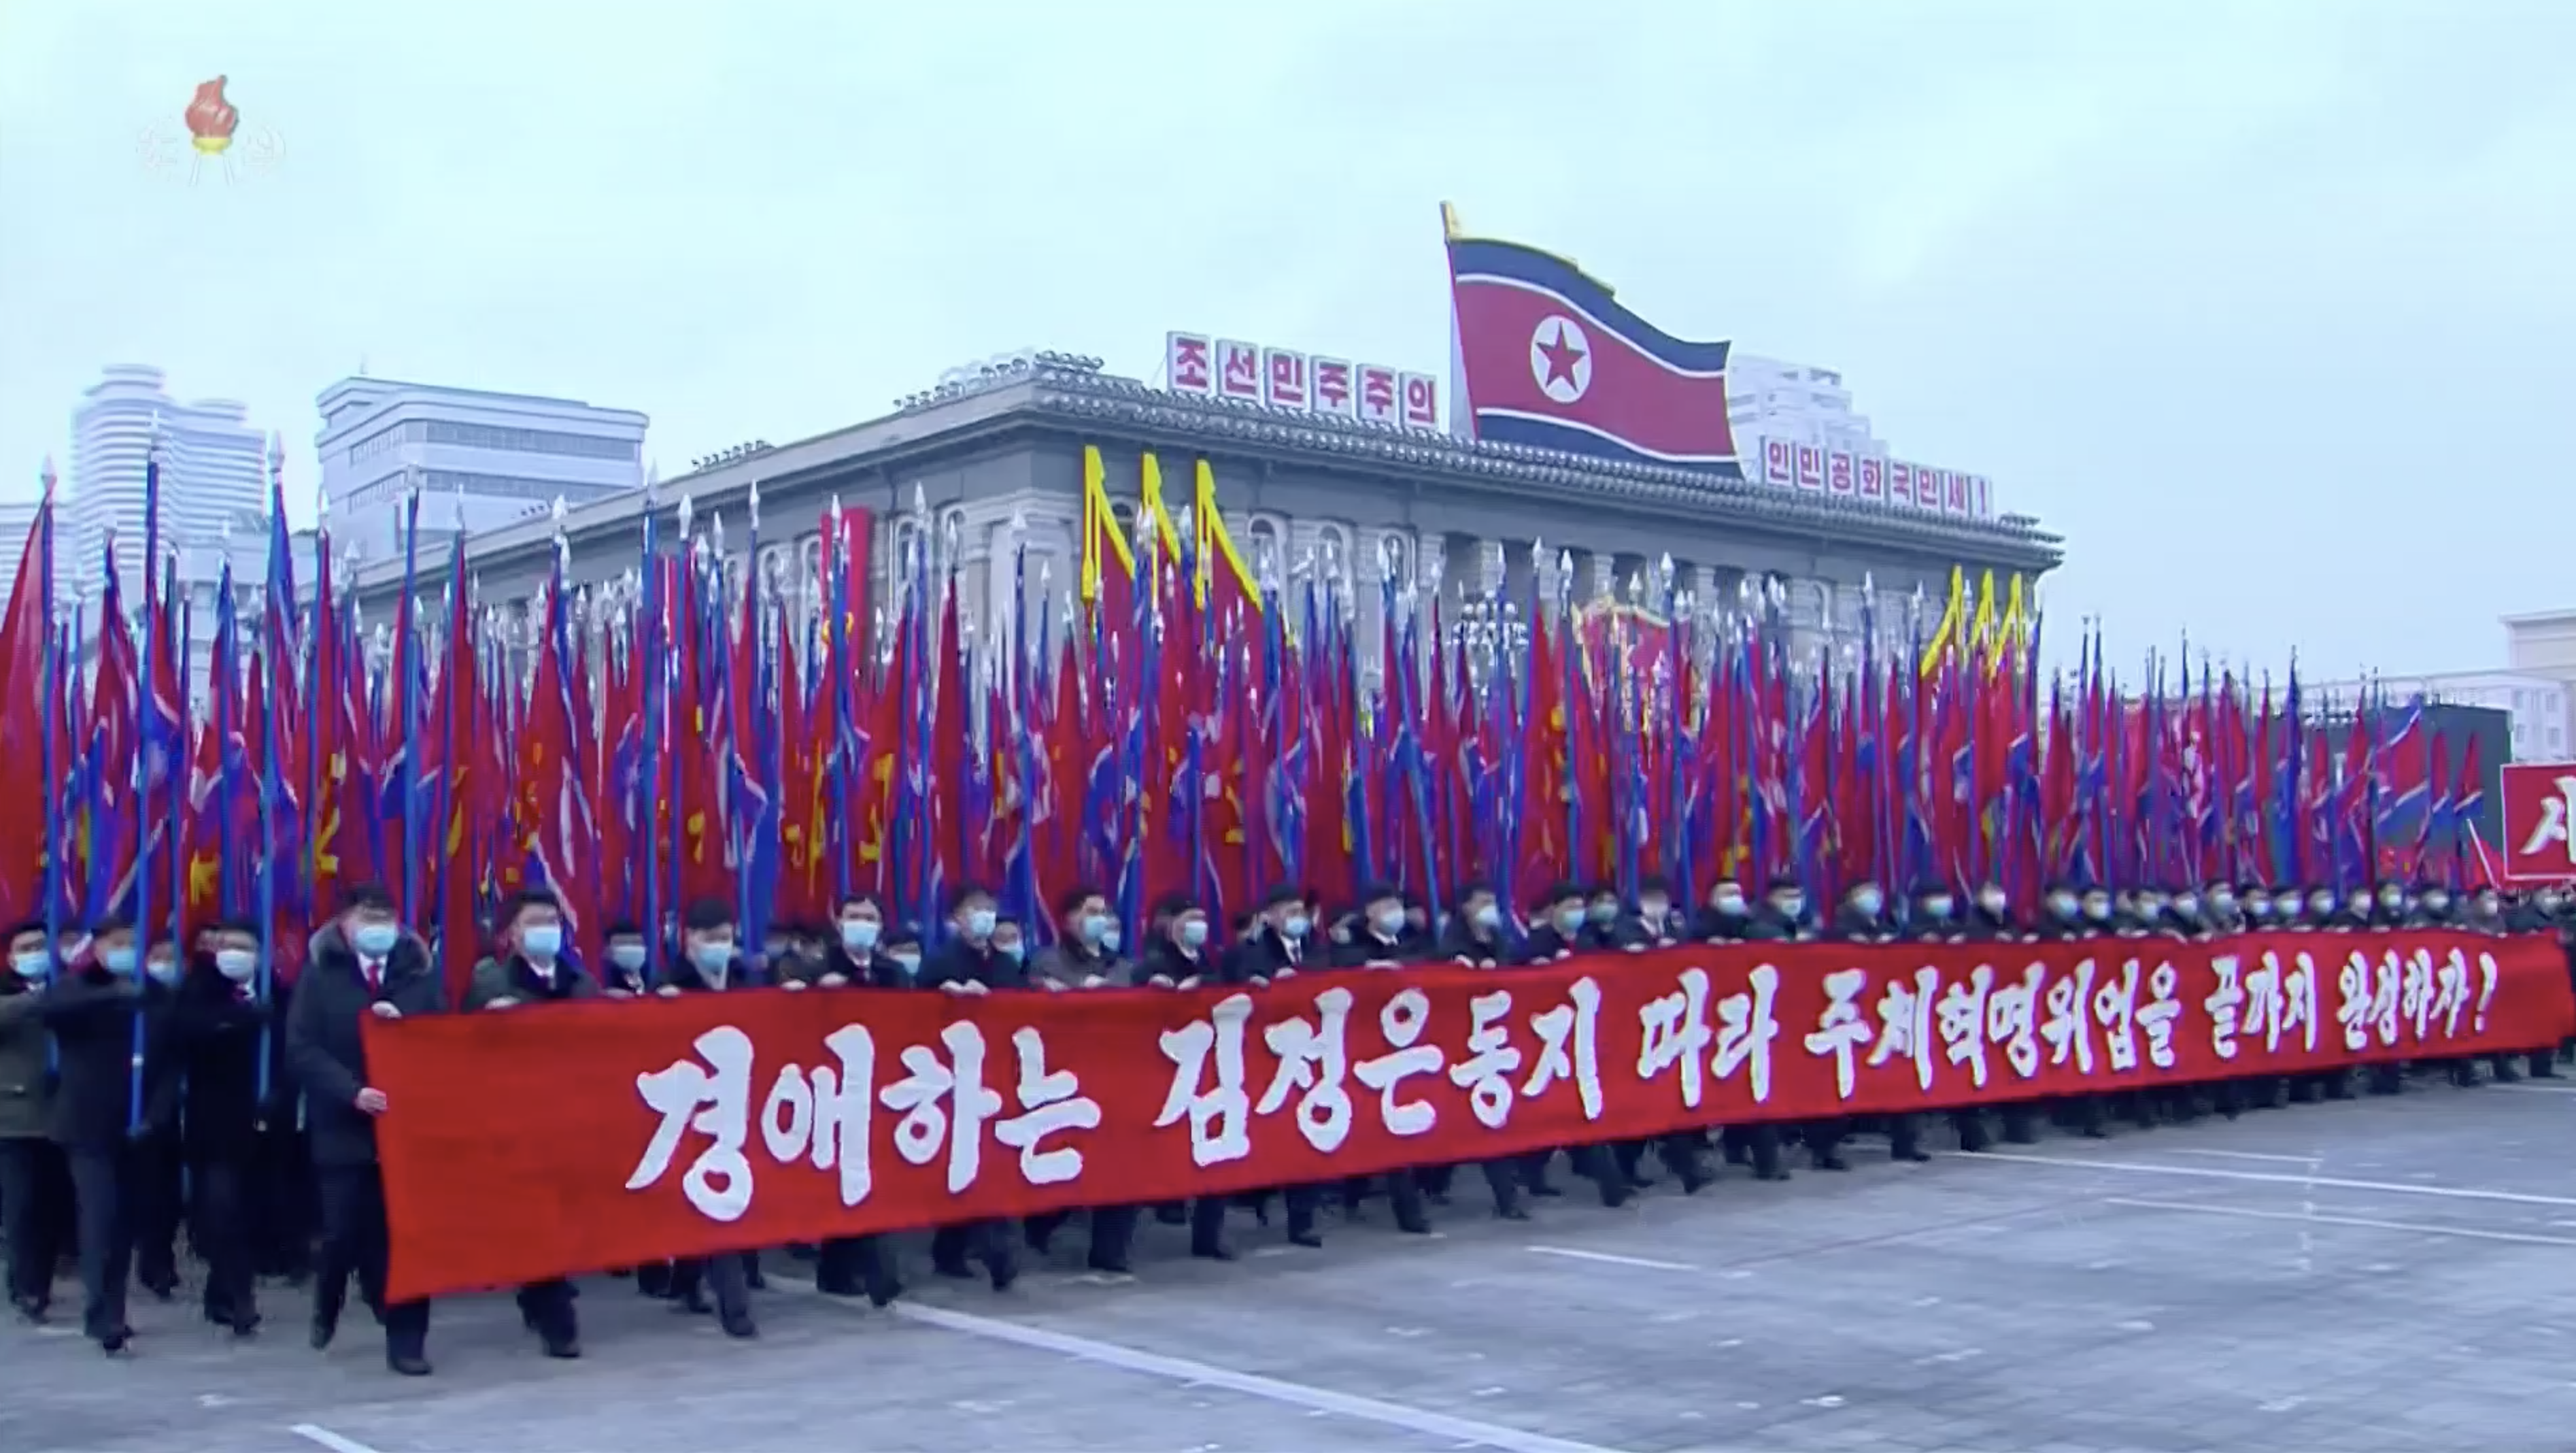 kctv-jan17-pyongyang-kim-il-sung-square-army-people-rally-propaganda-slogans-posters-post-congress-00016.png